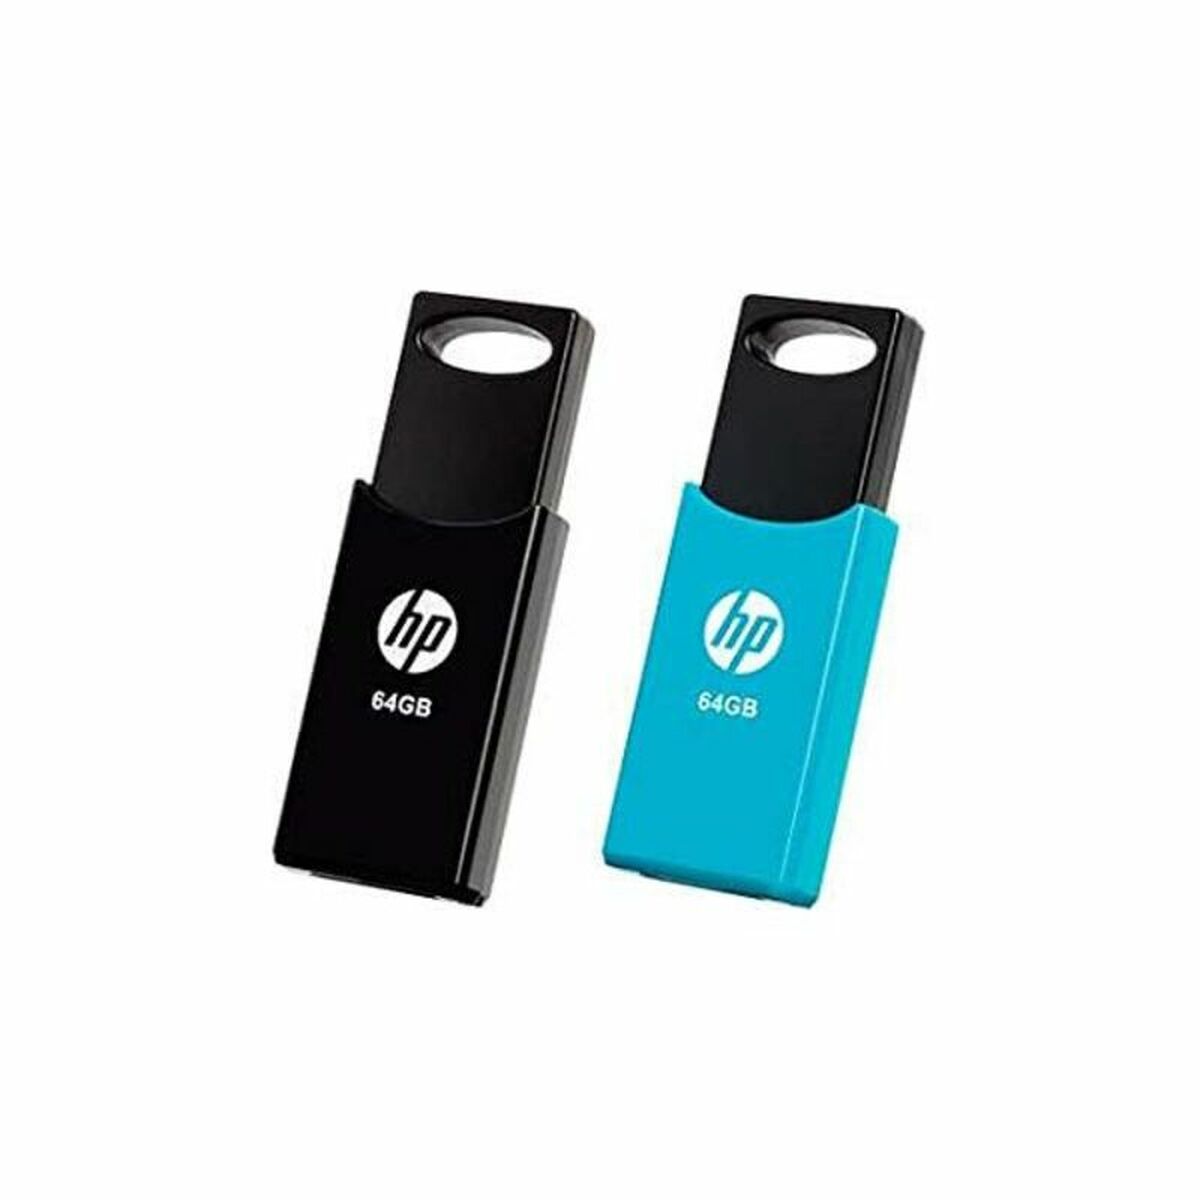 USB stick HP 212 USB 2.0 (2 uds)